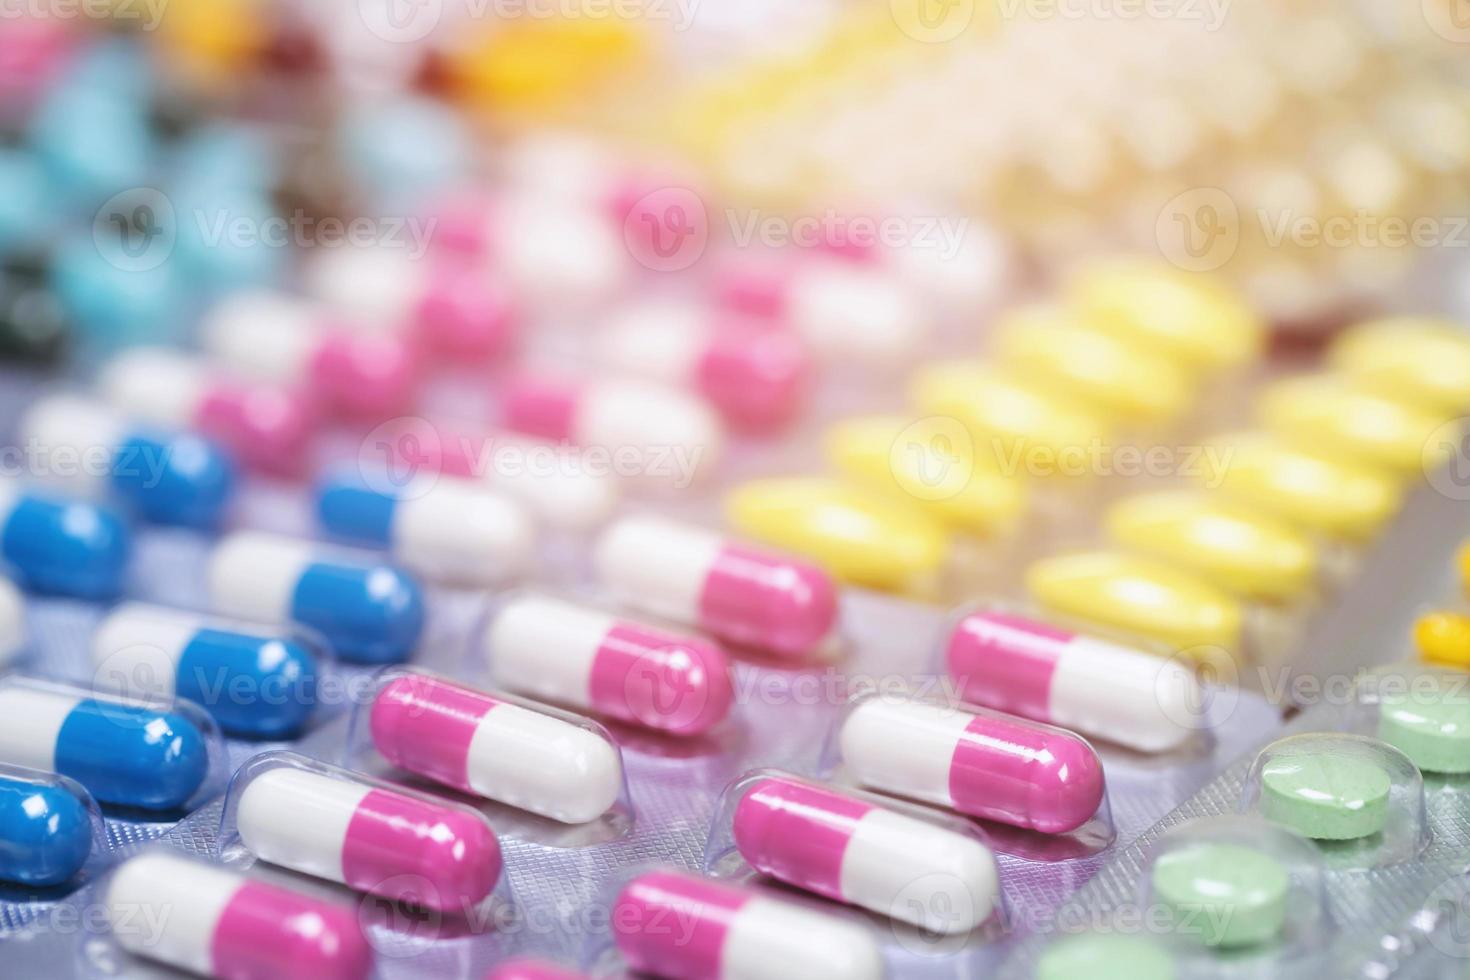 nahaufnahme pharmazeutika antibiotika pillen medizin in blisterpackungen stapeln. bunte antibakterielle pillenapotheke. kapsel pille medizin antimikrobielle medikamentenresistenz. Pharmaindustrie foto